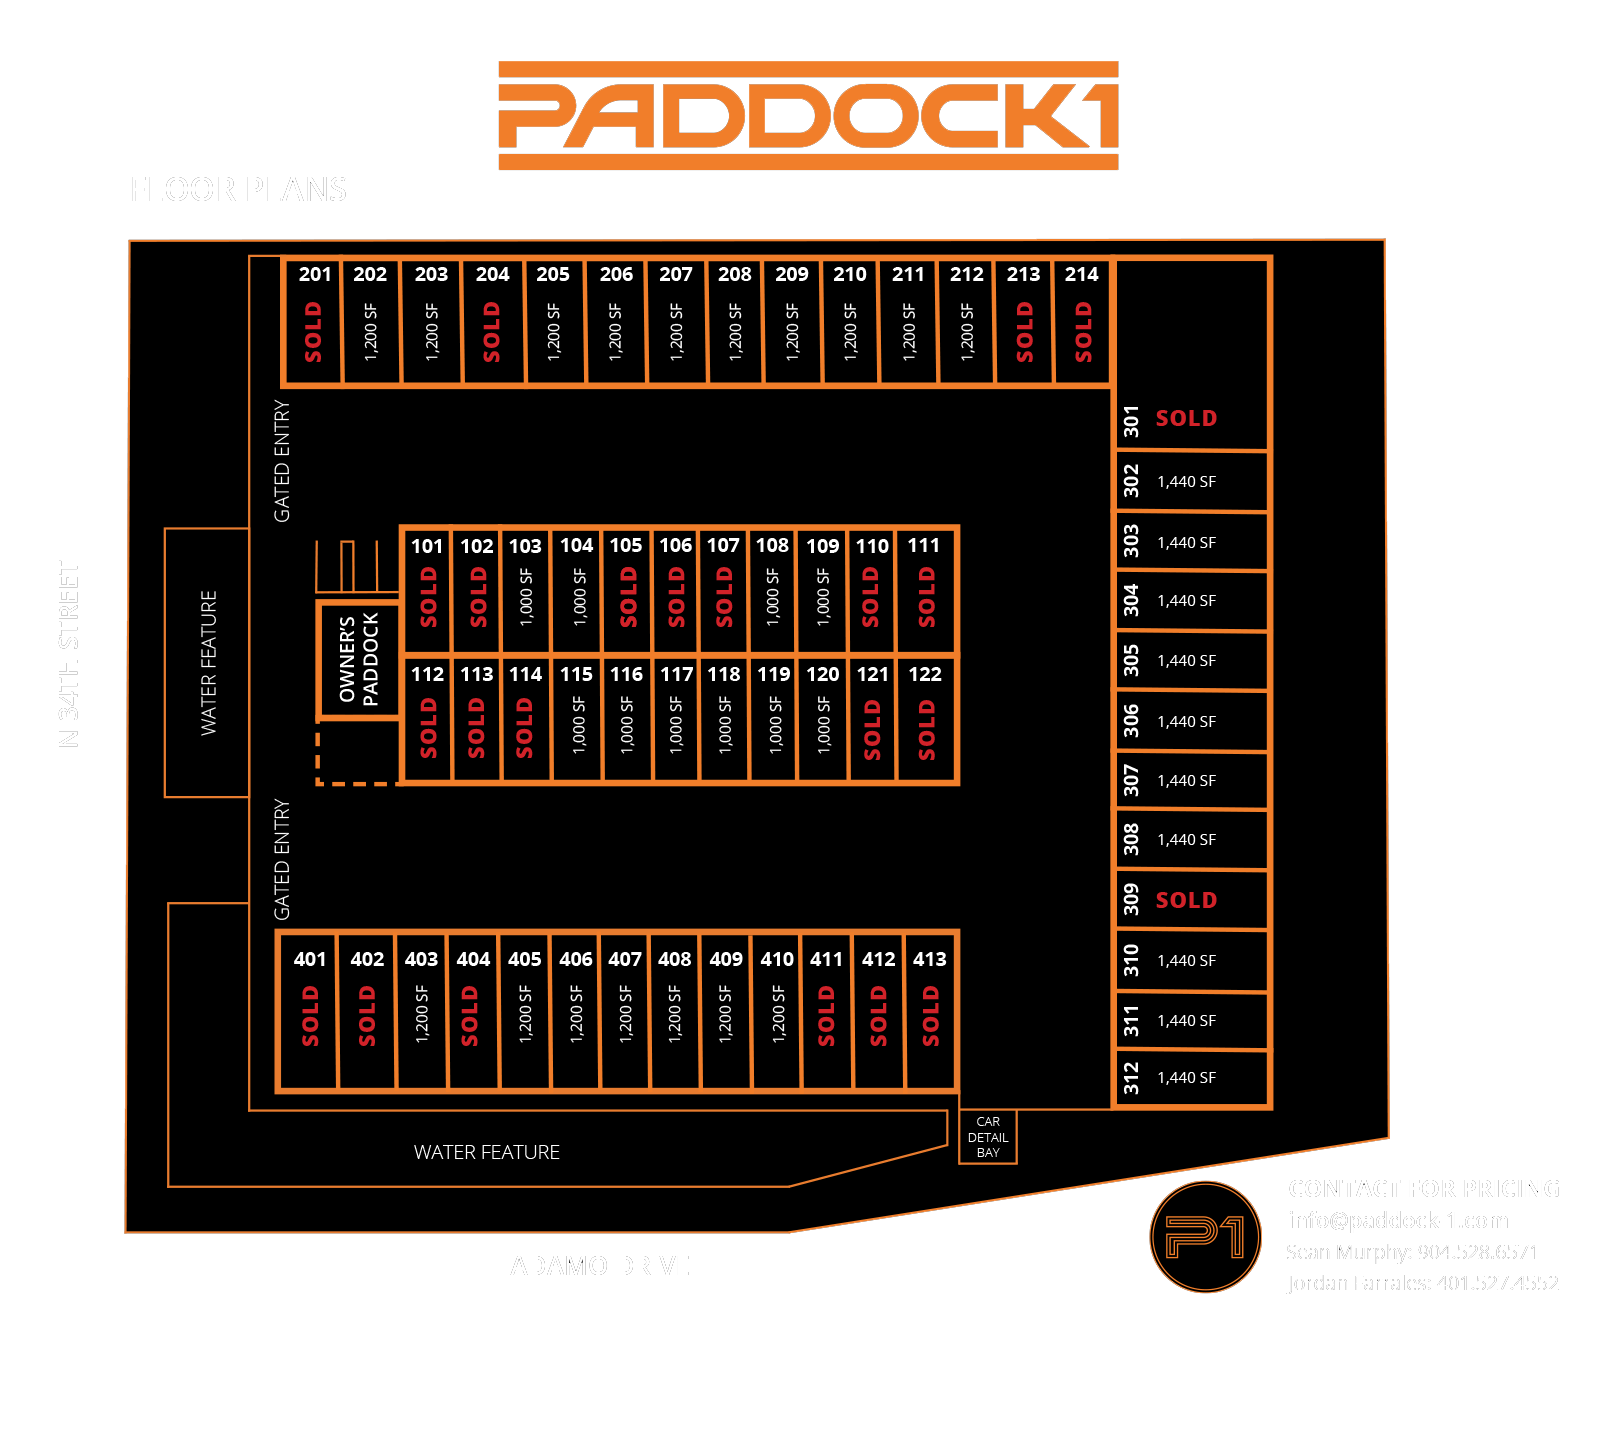 Paddock1 - Tampa Unit Availability